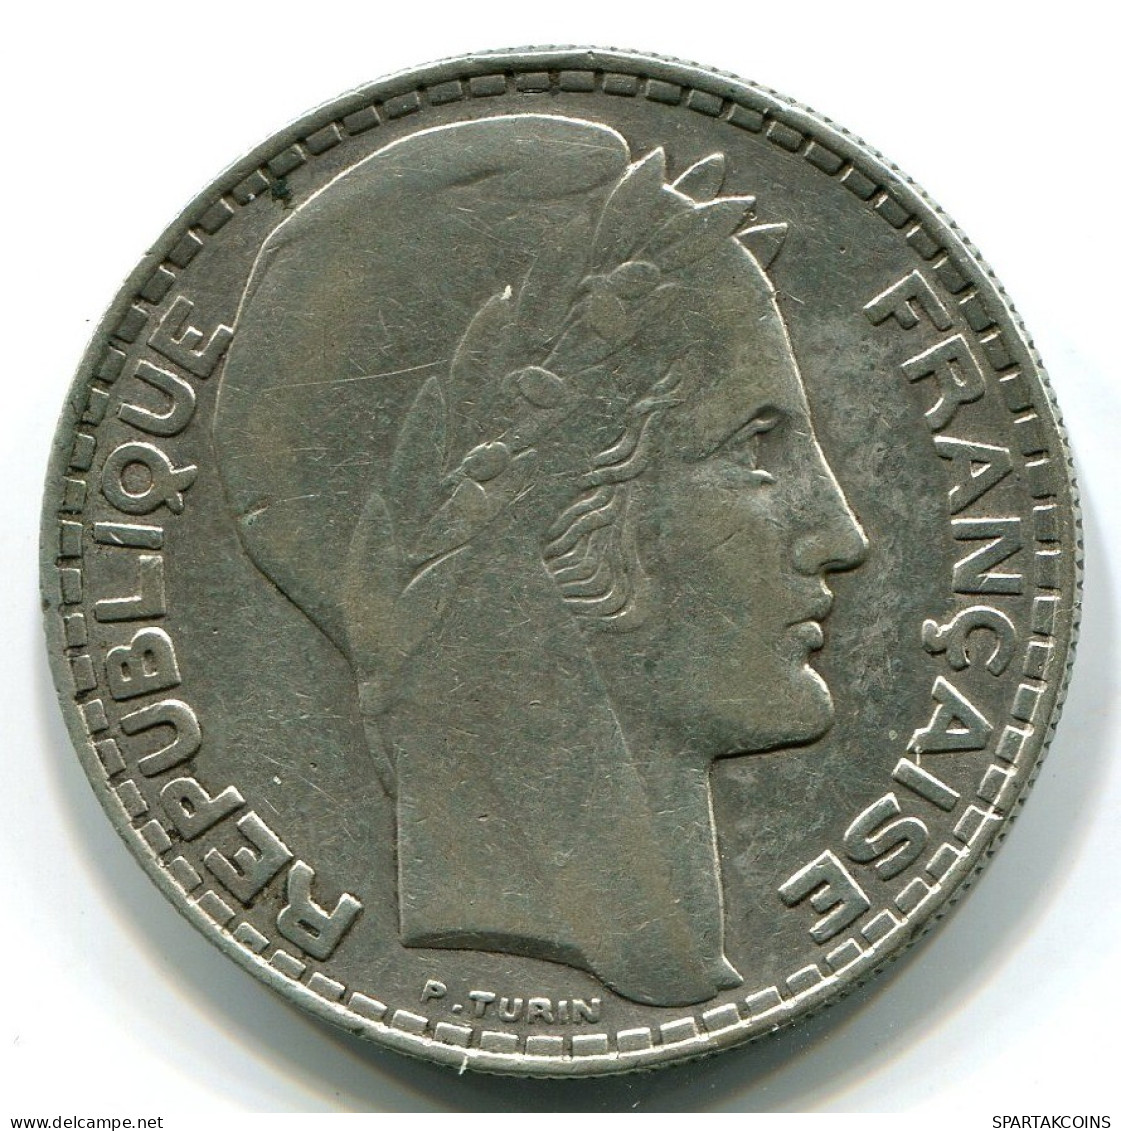 20 FRANCS 1933 FRANCE Coin SILVER XF #W10507.30.U.A - 20 Francs